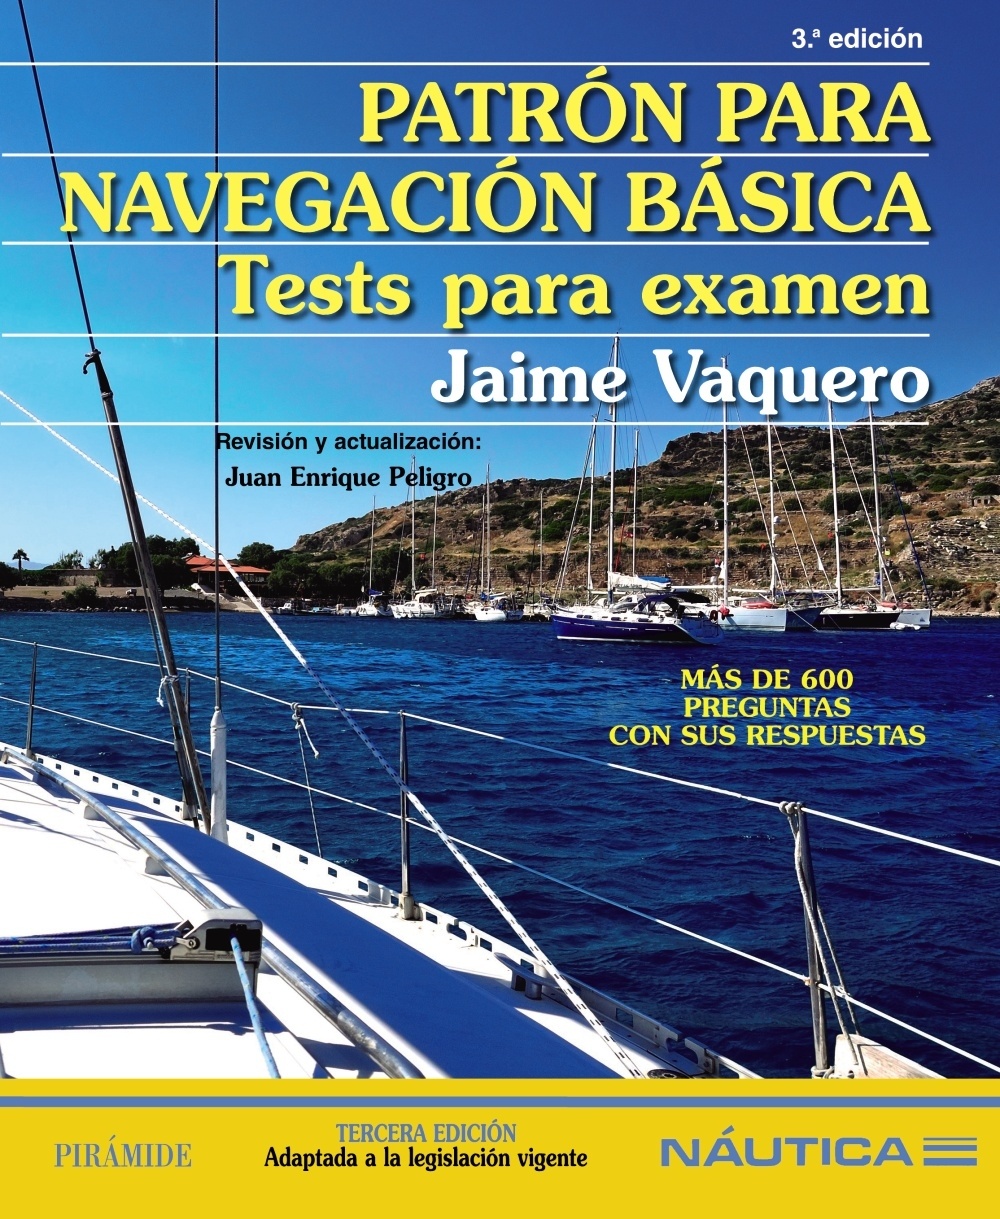 Patrón para navegación básica "Tests para examen"